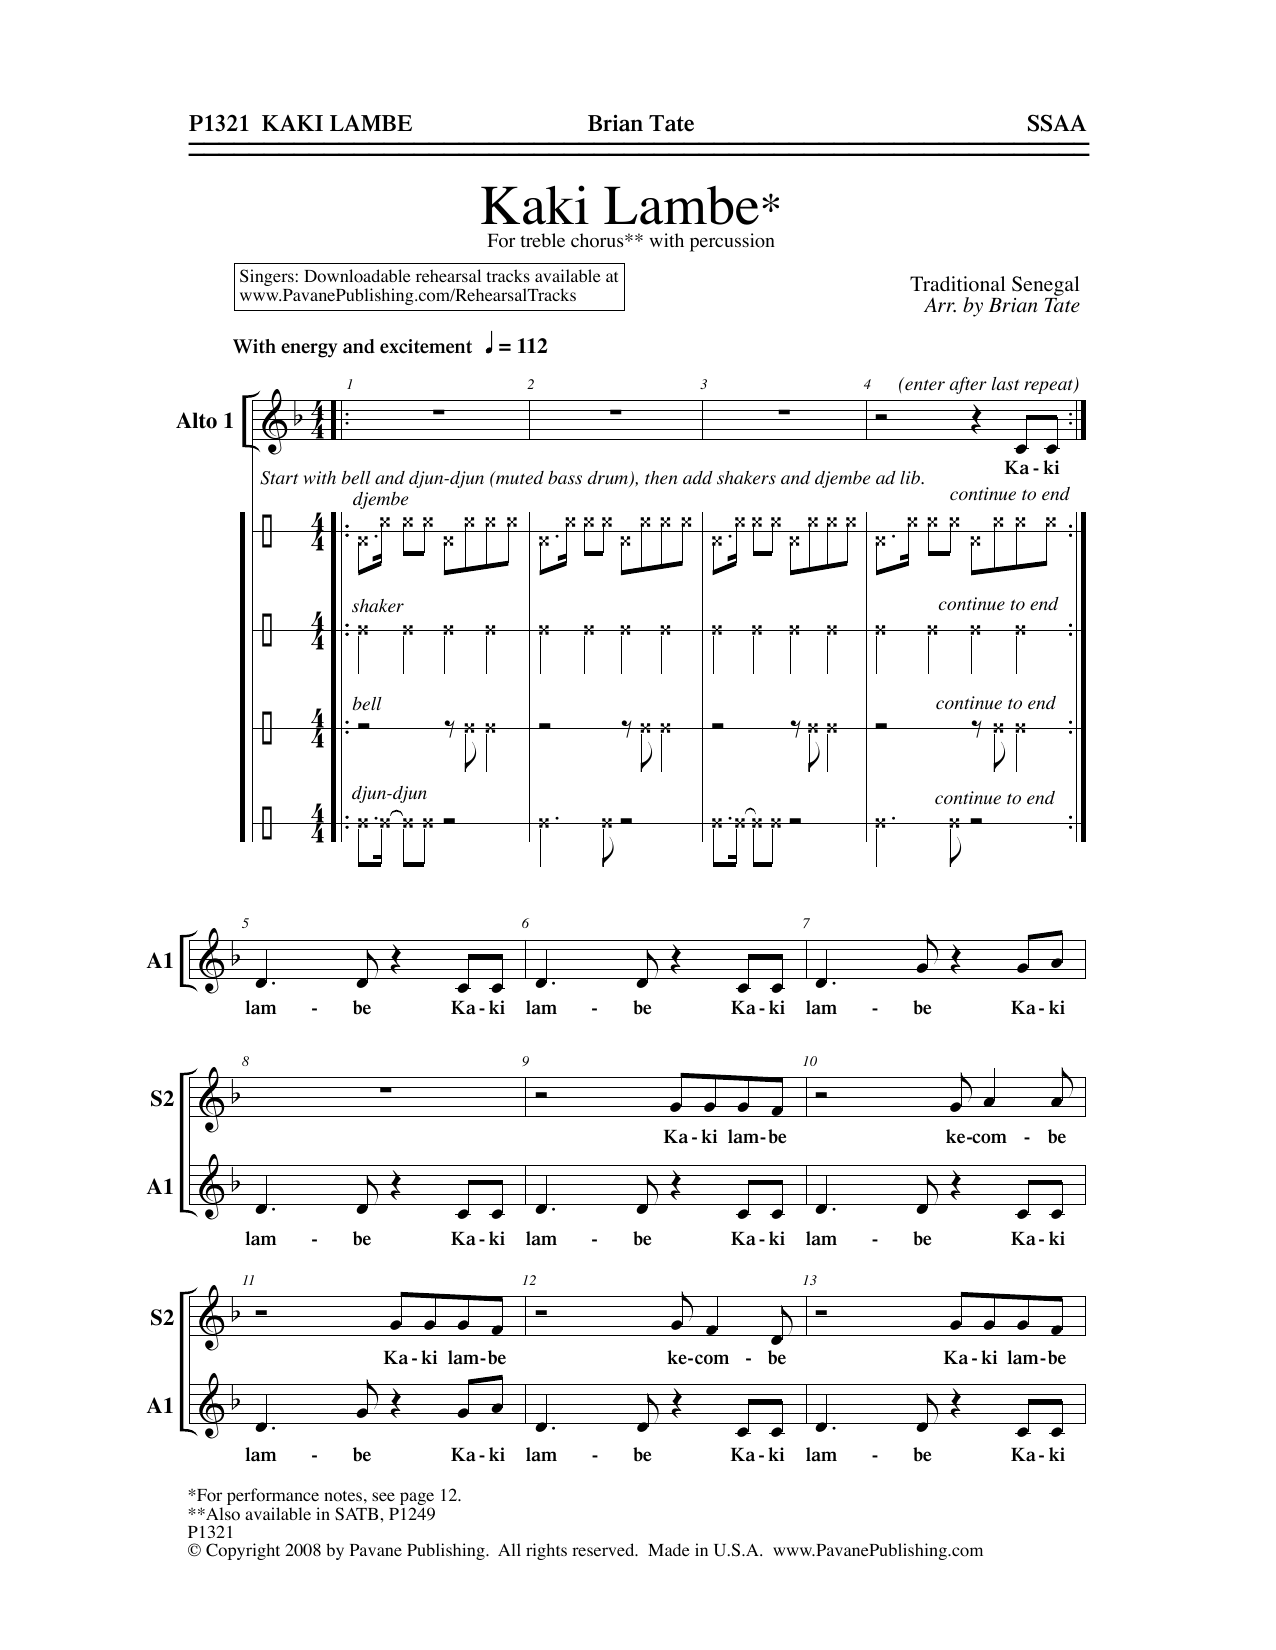 Brian Tate Kaki Lambe Sheet Music Notes & Chords for SSA Choir - Download or Print PDF